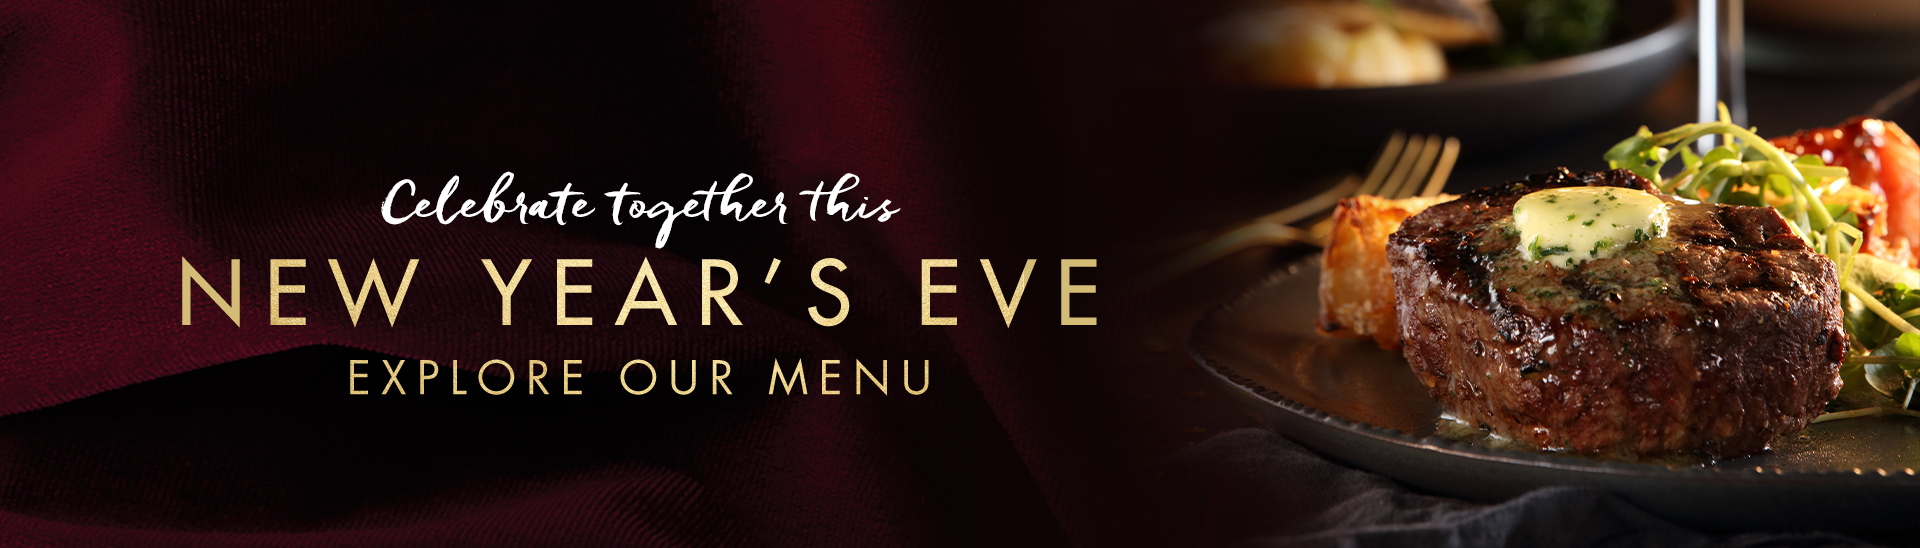 New Year’s eve menu at Miller & Carter Newbury Park 